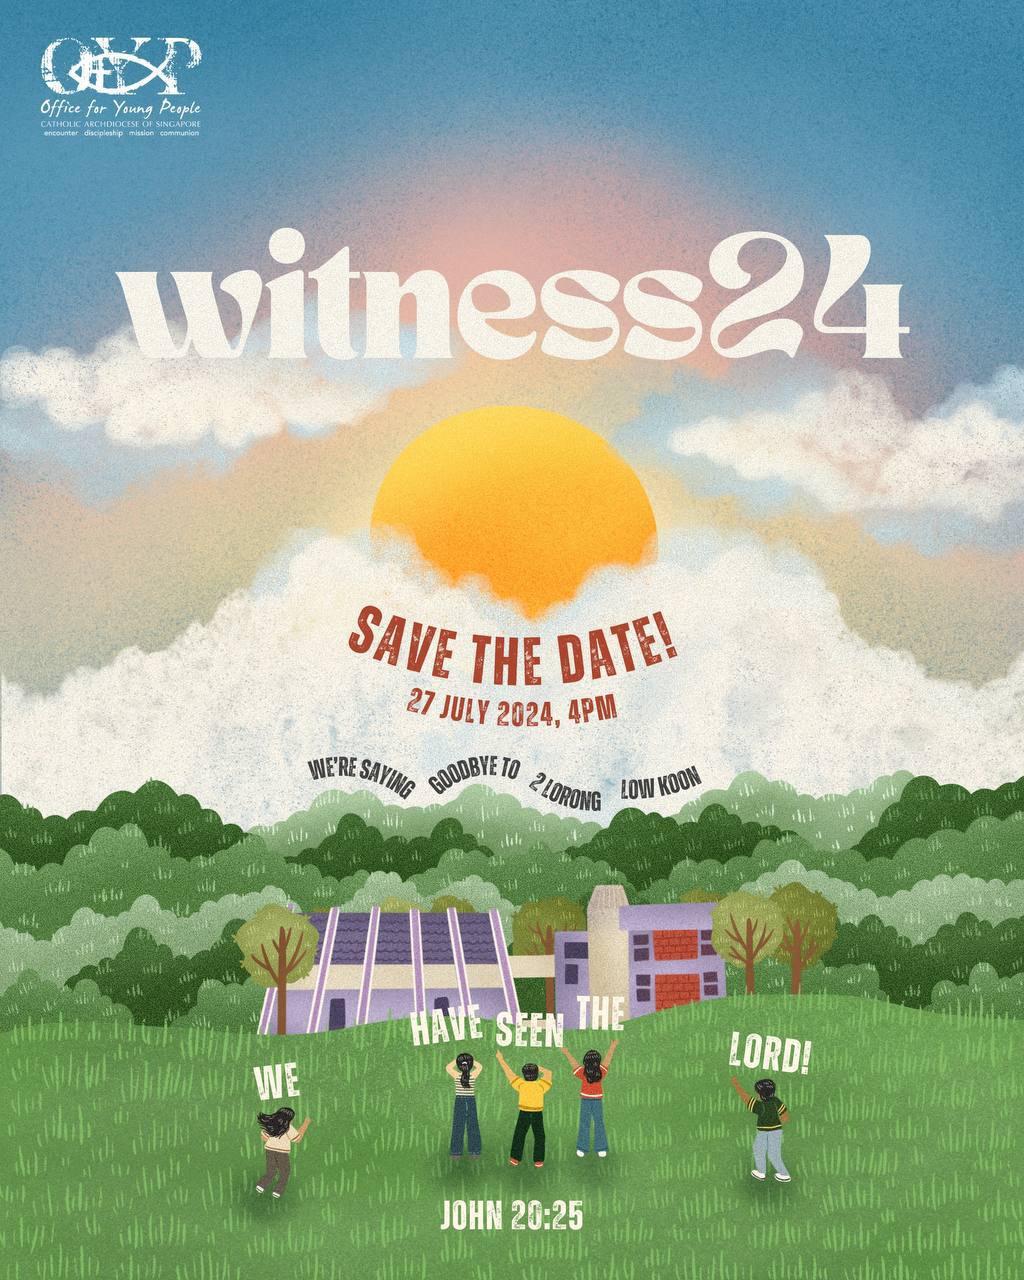 WITNESS24